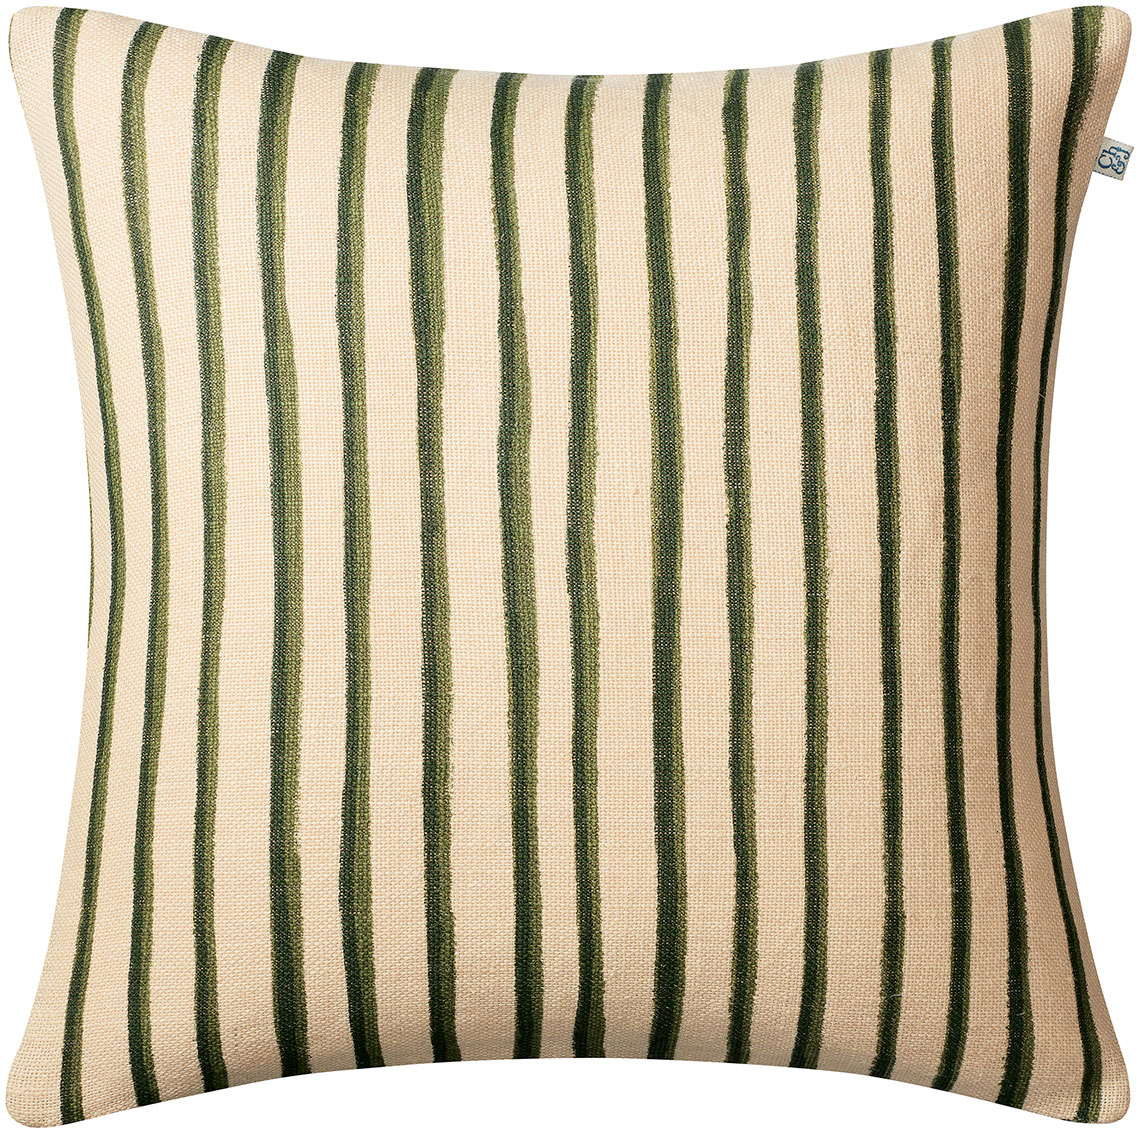 Jaipur Stripe Tyynynpäällinen 50x50 cm, Light Beige / Cactus Green / Green